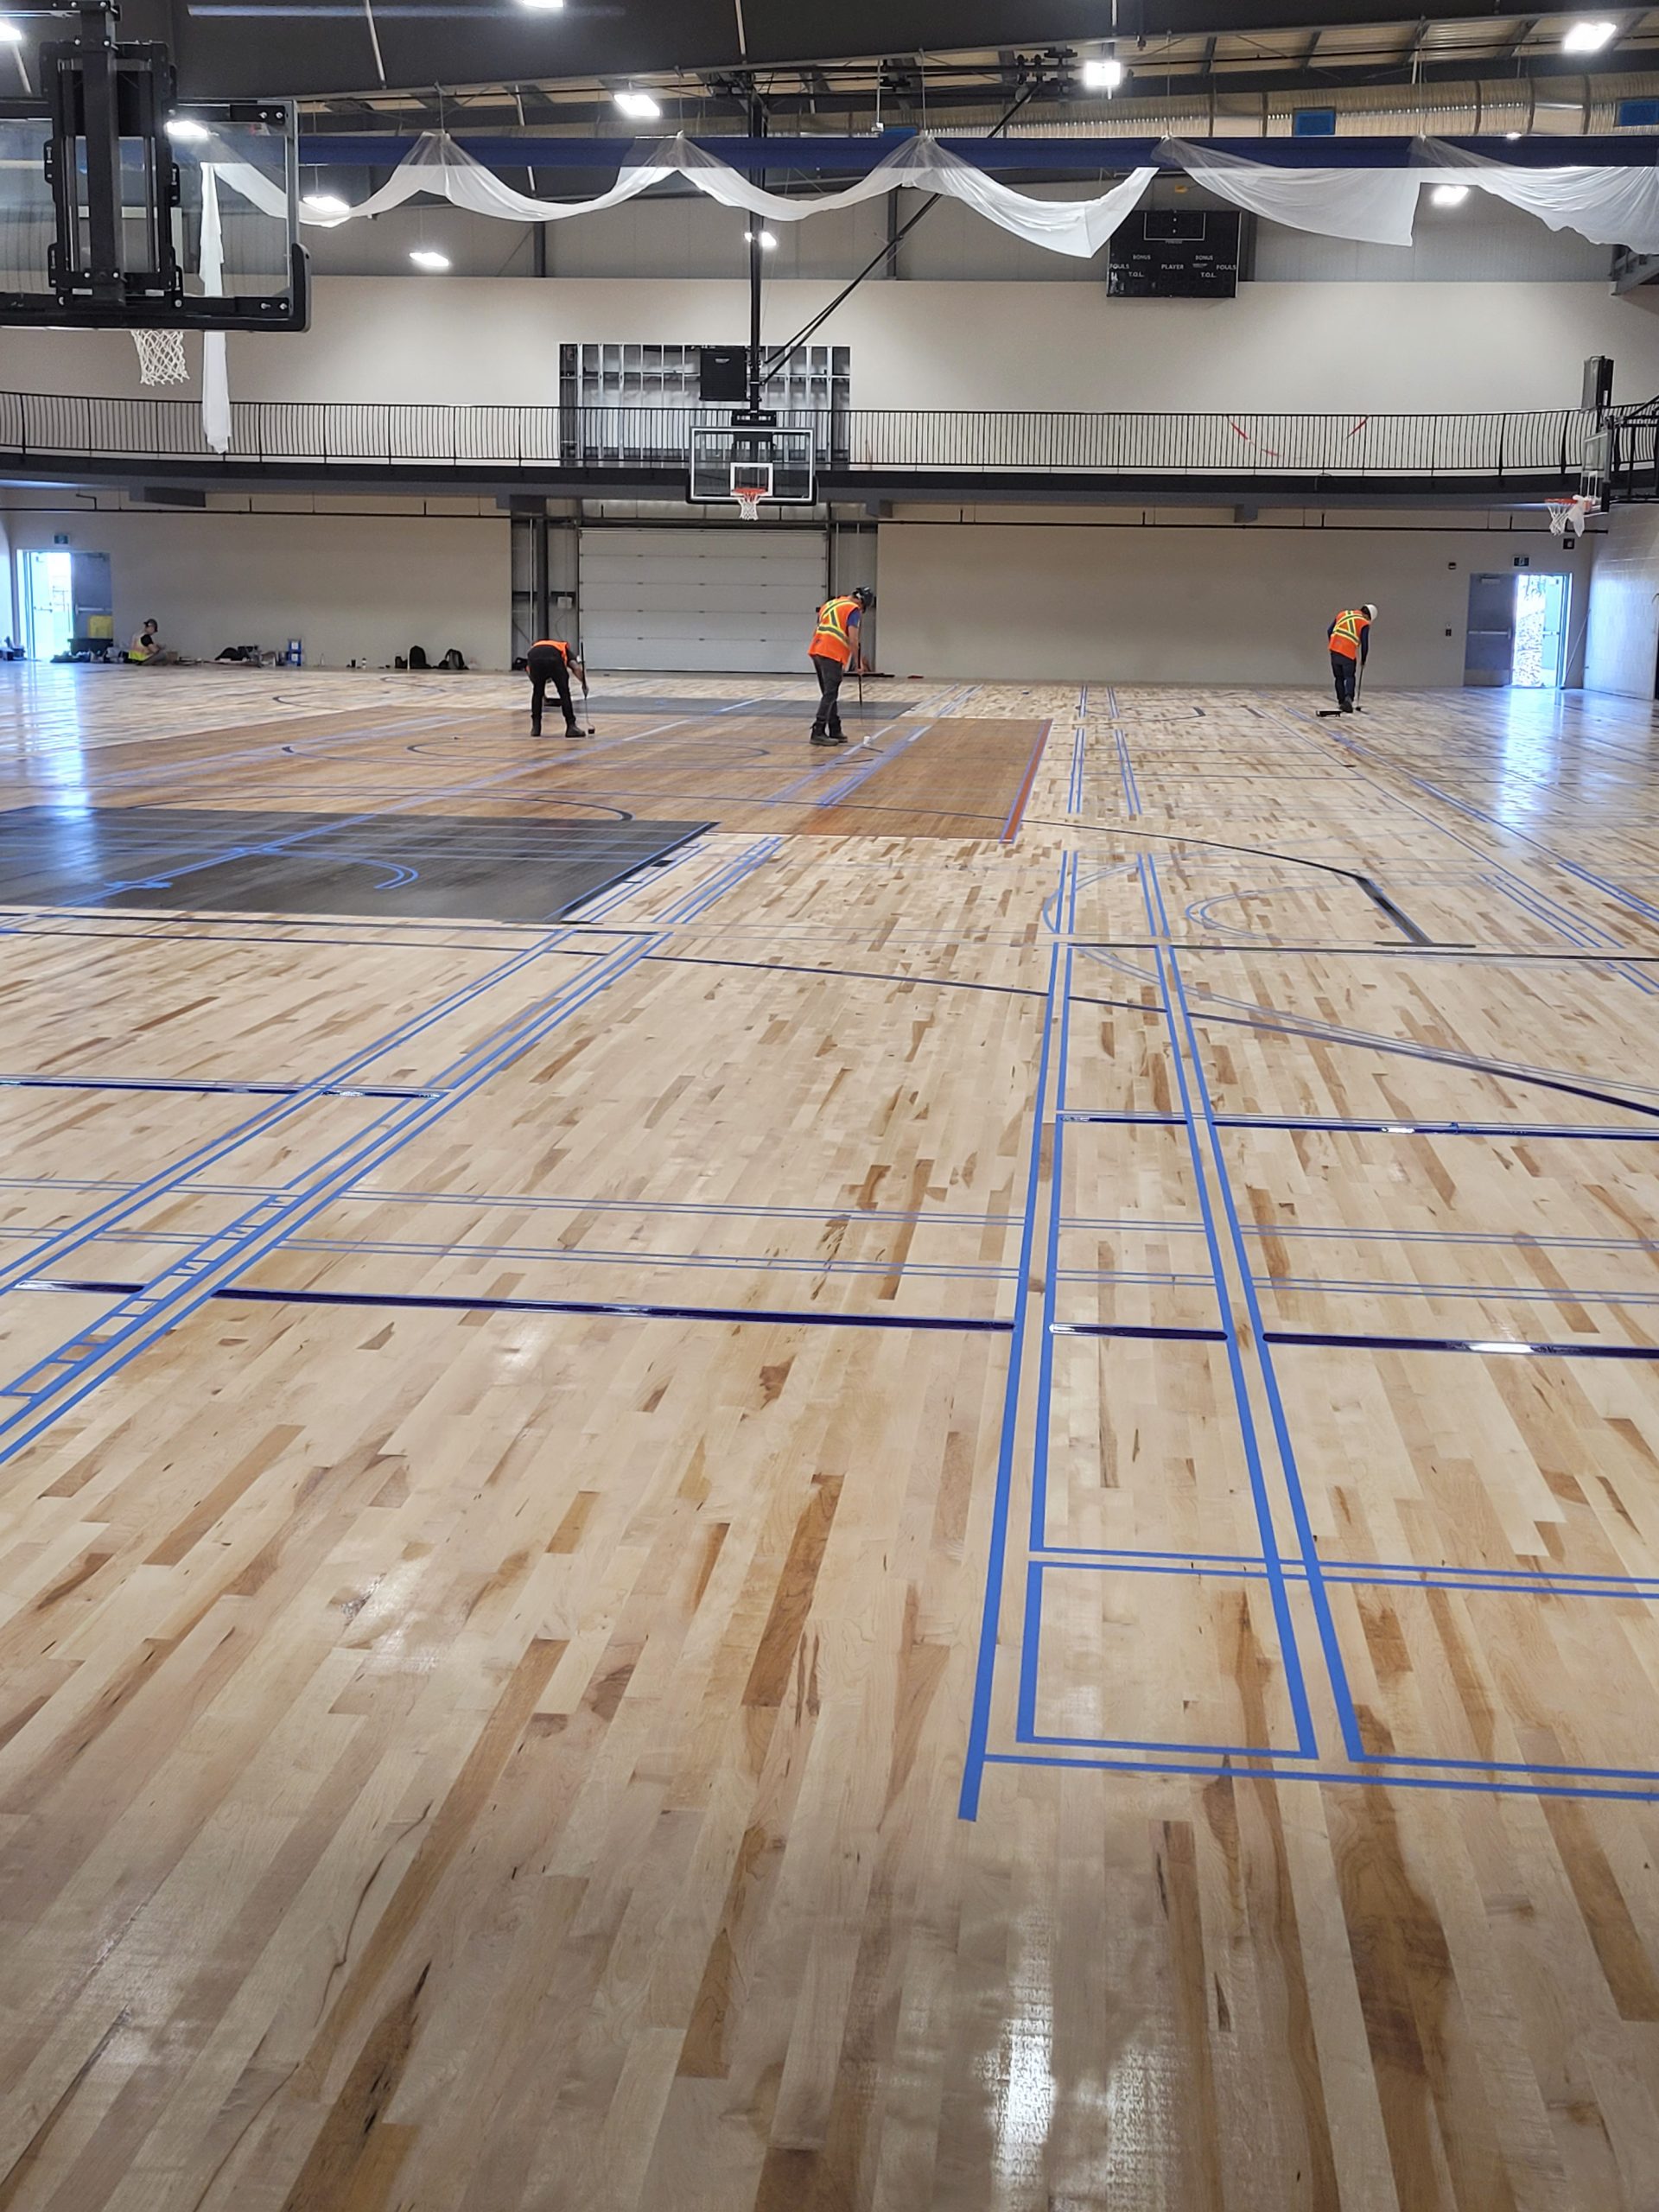 June 2021 - Fieldhouse floor is being prepared for lines!